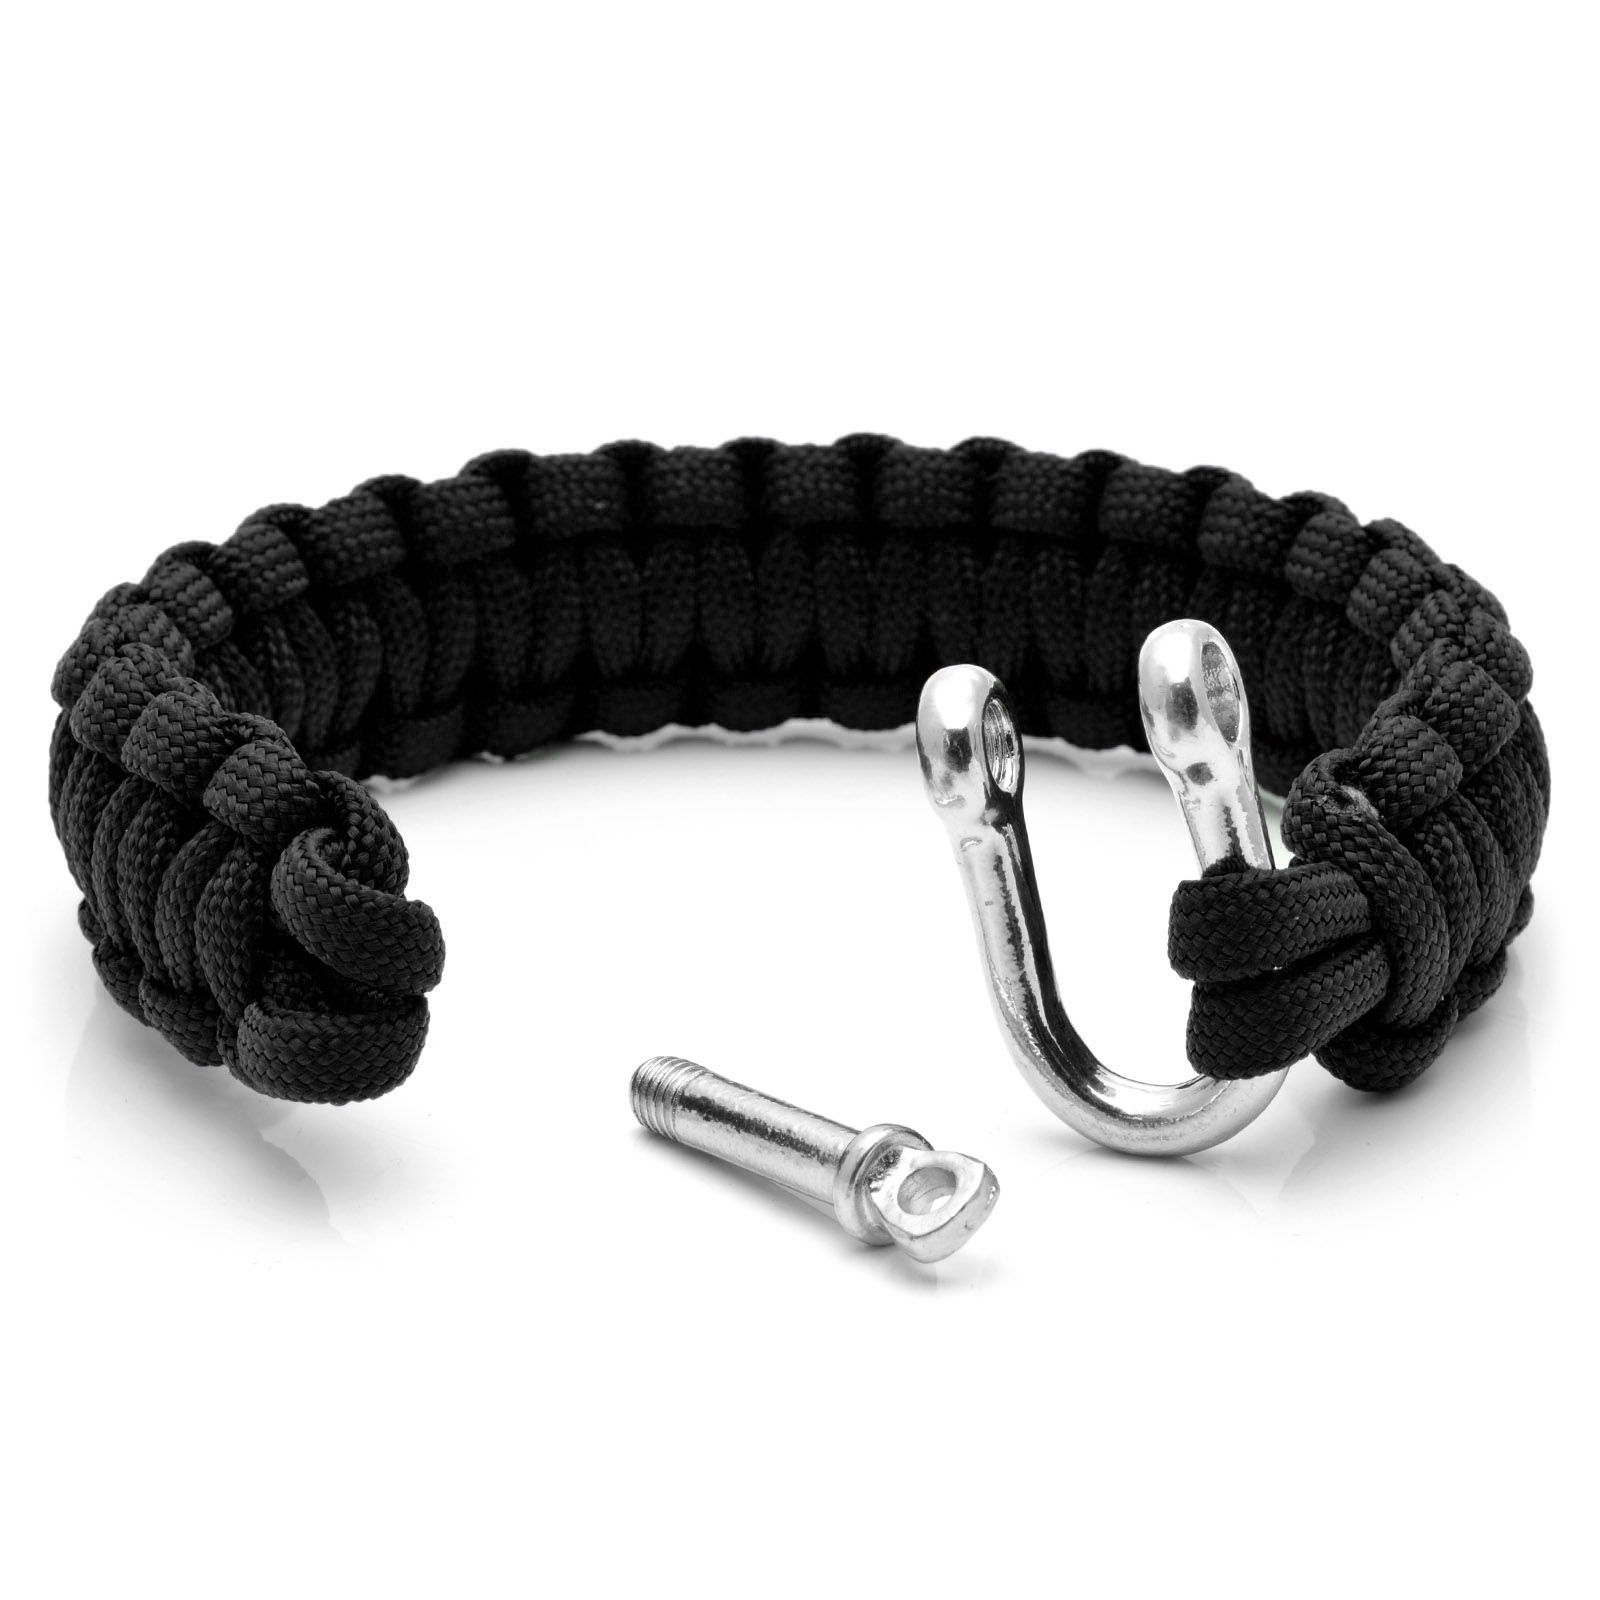 Black Paracord & Metal Lock Bracelet